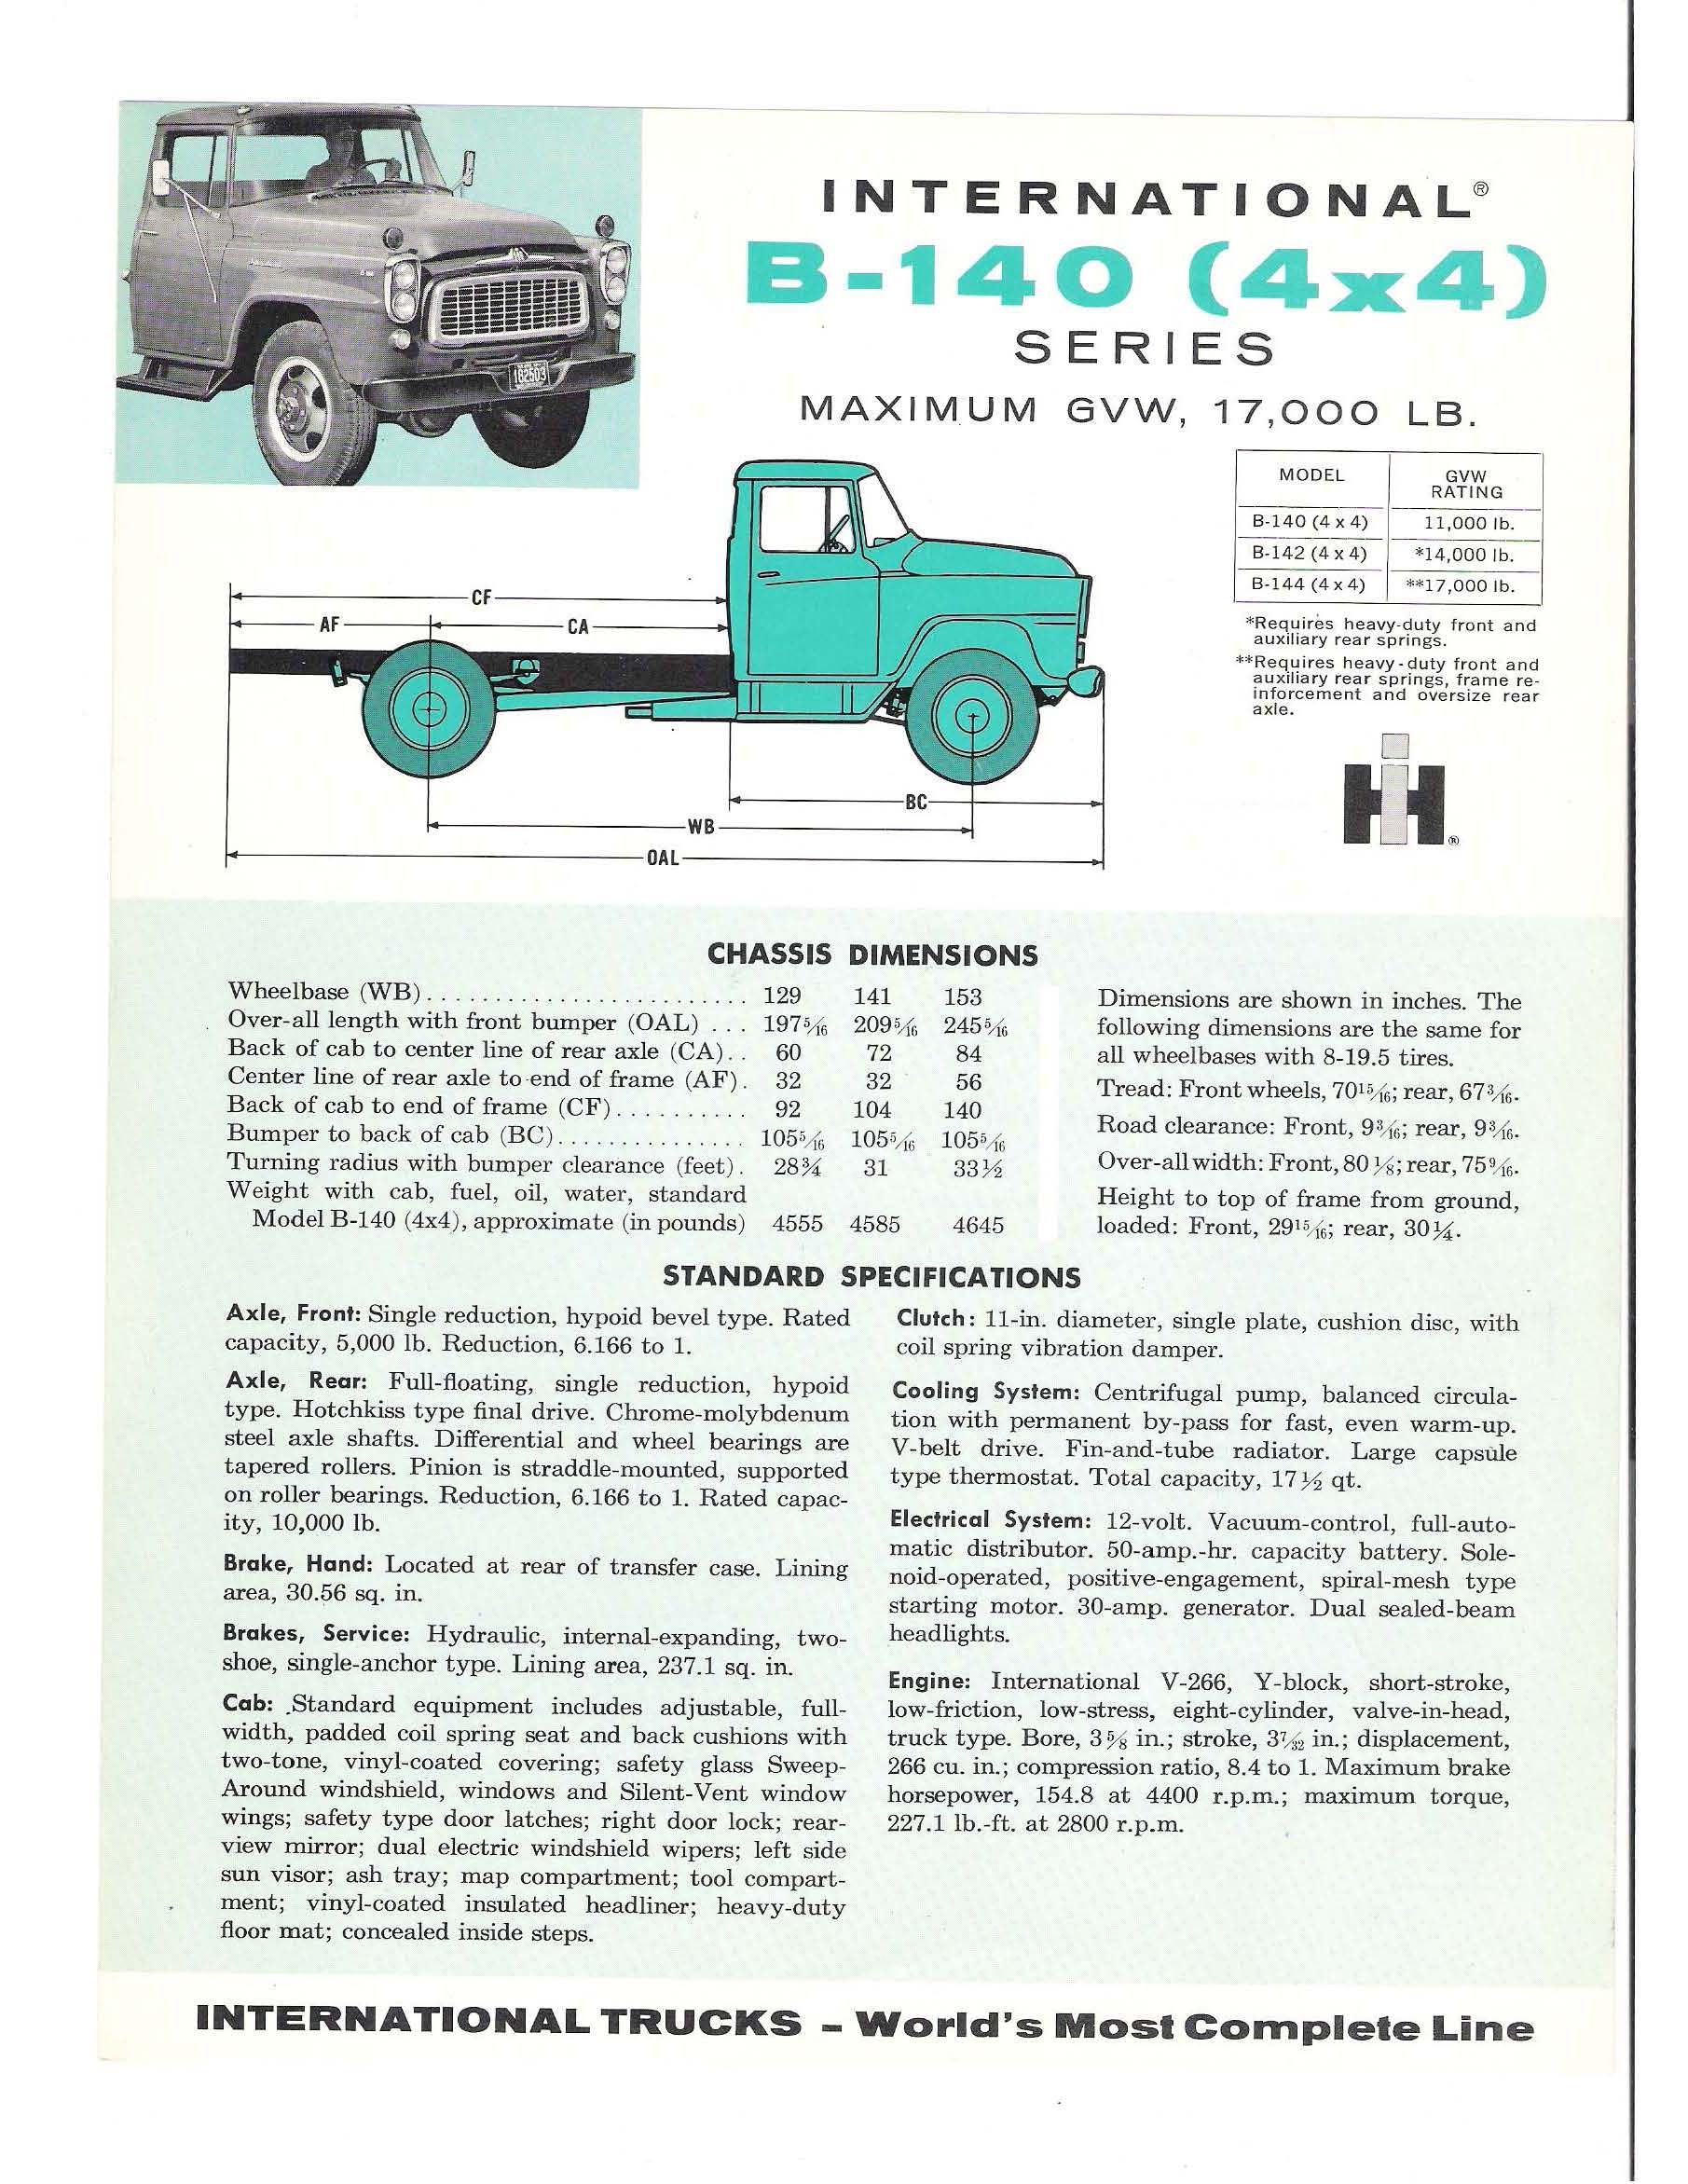 1959 International B-140 4X4 Series Brochure Page 2